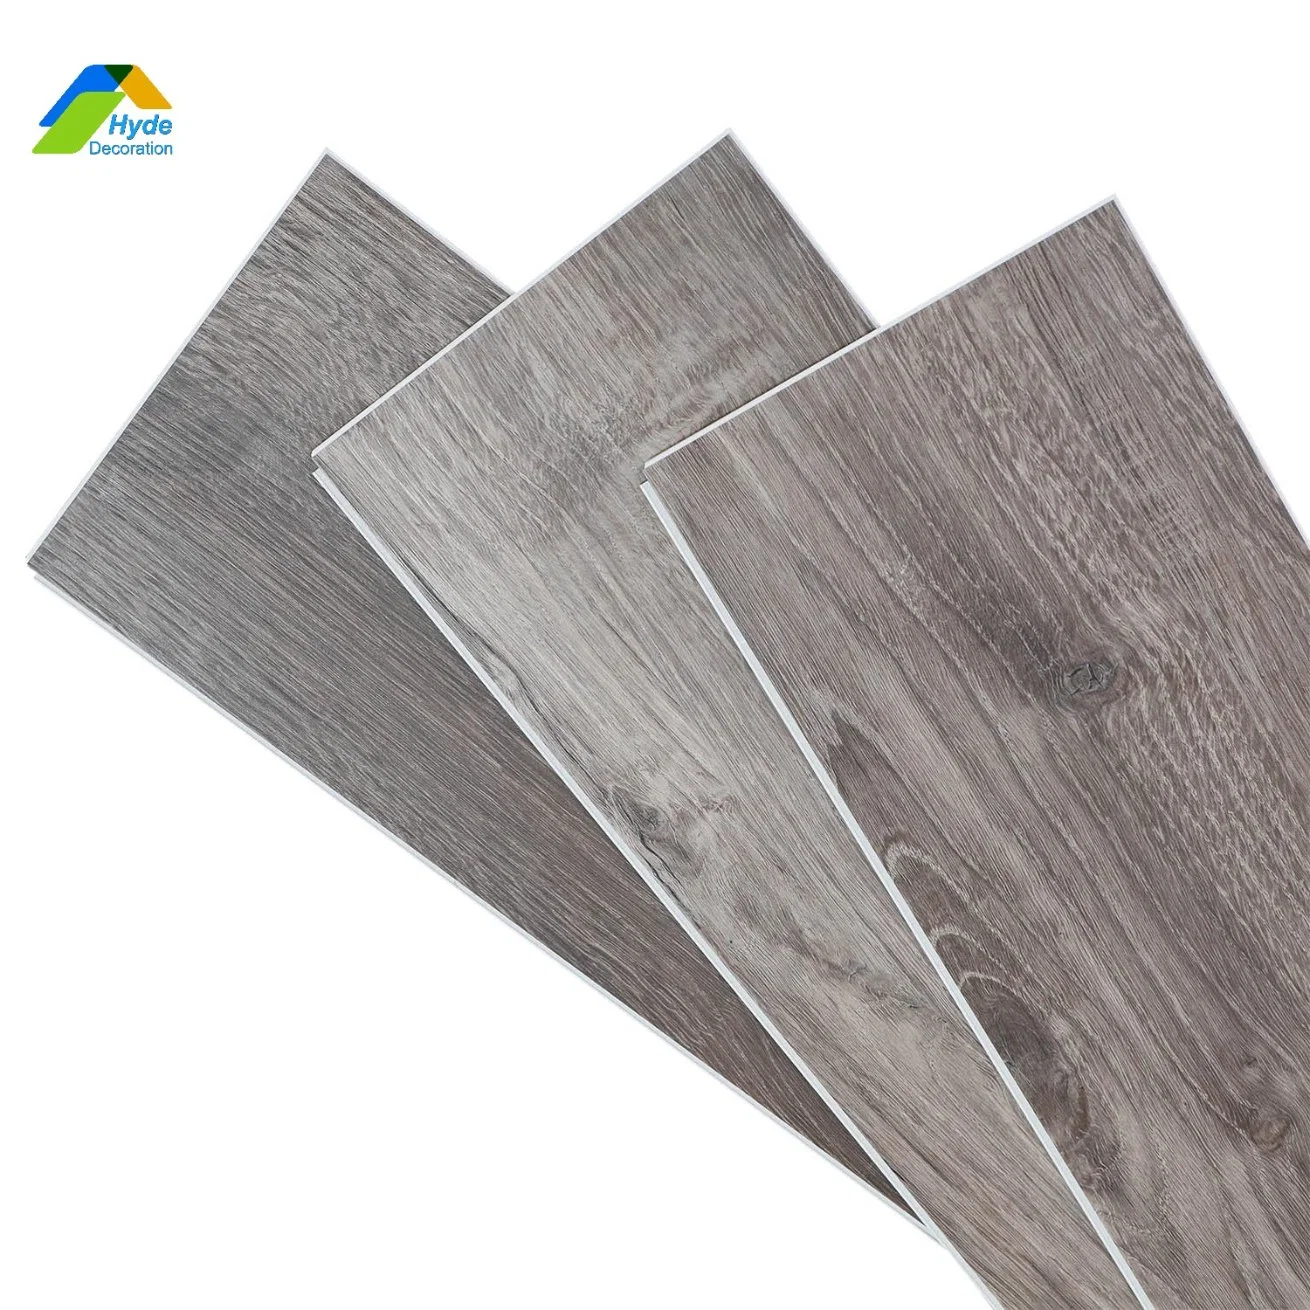 Wholesale 4mm Water Proof PVC Linoleum Flooring Interlocking Spc Vinyl Wood Plank Tile